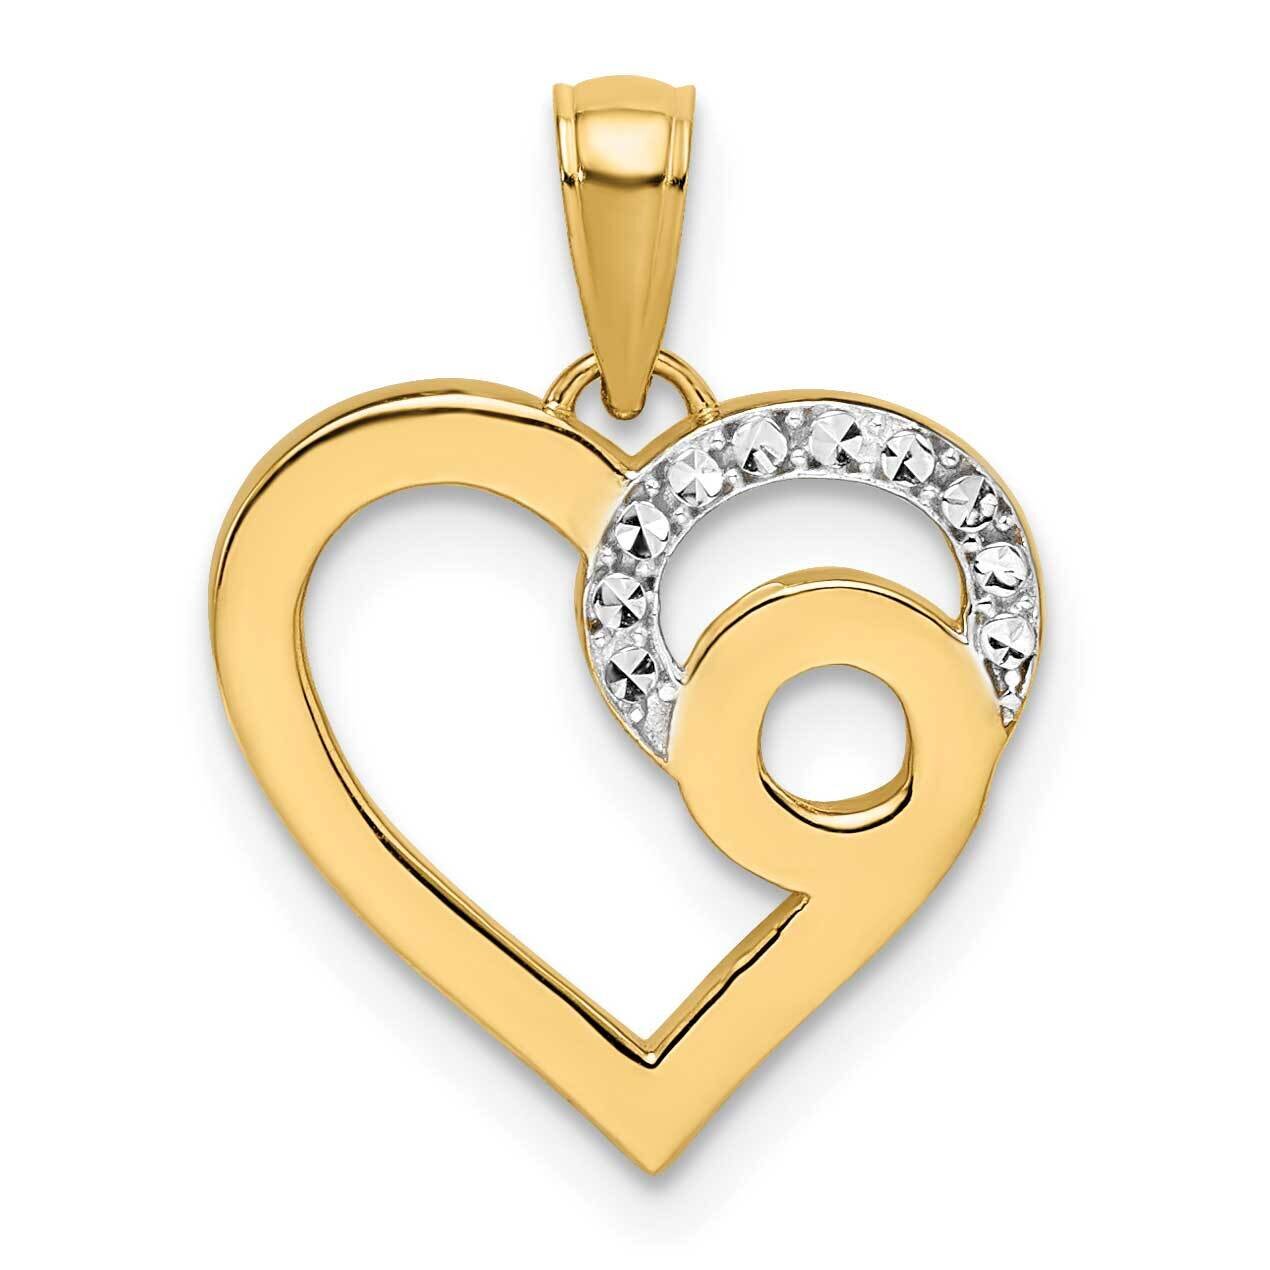 Swirls Heart Pendant 14k Gold and White Rhodium Diamond-Cut M2936